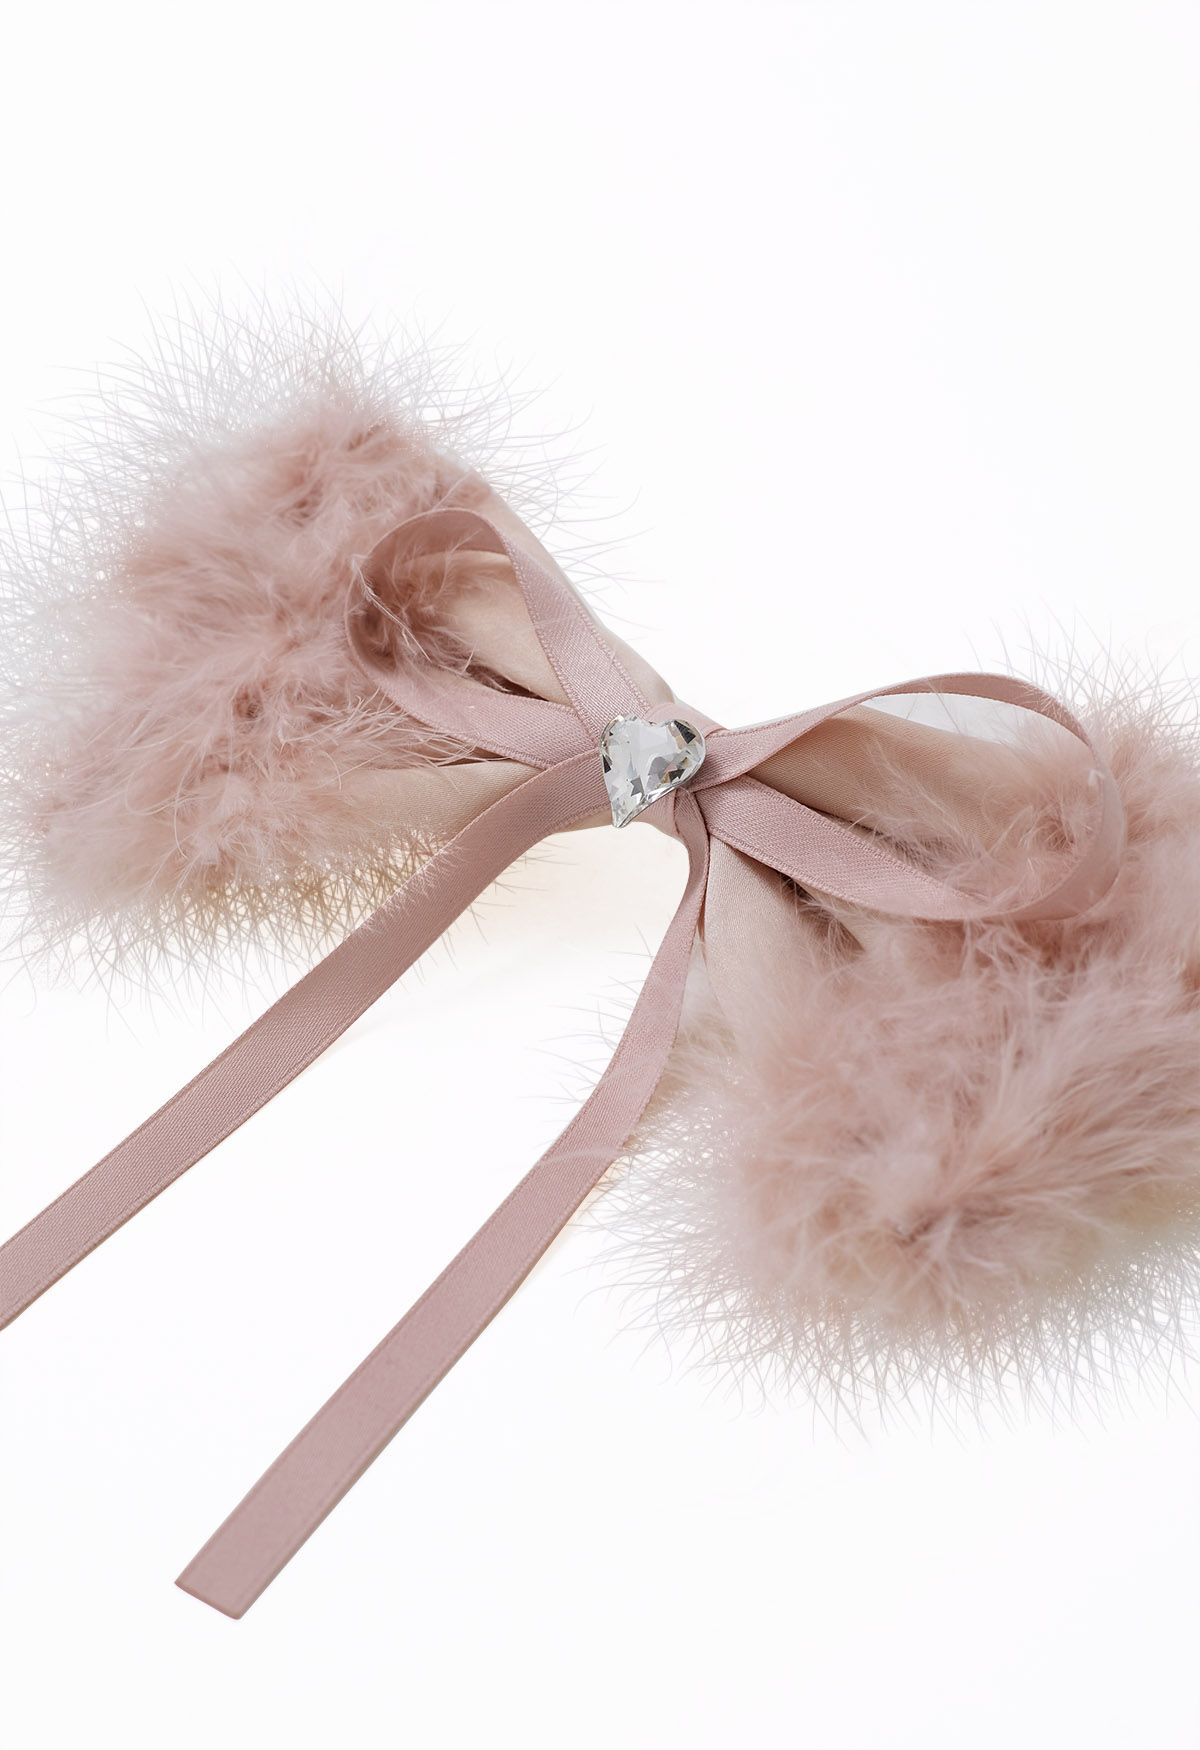 Heart Rhinestone Fuzzy Bowknot Hair Clip in Pink